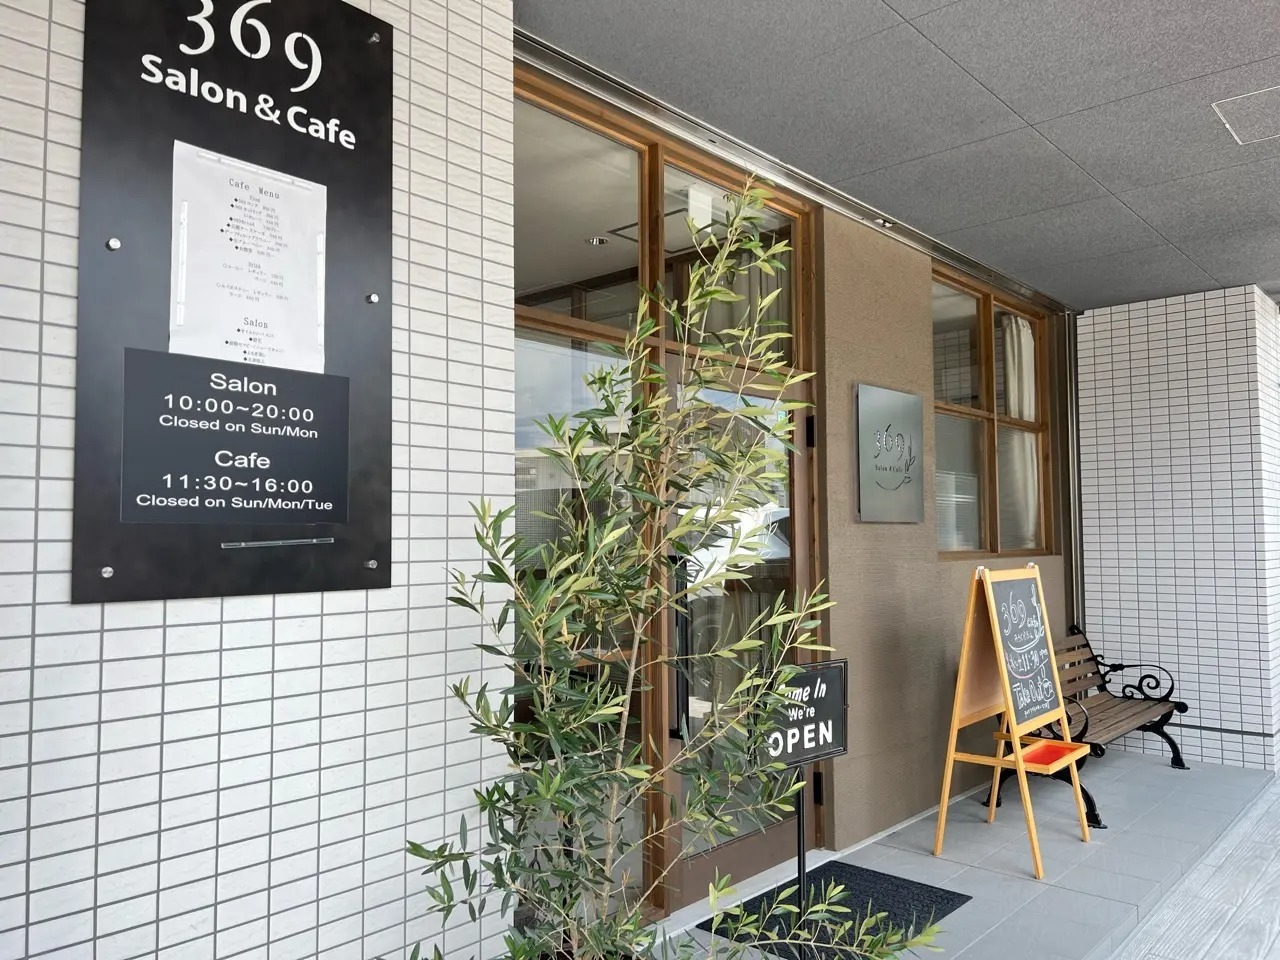 369Salon&Cafe